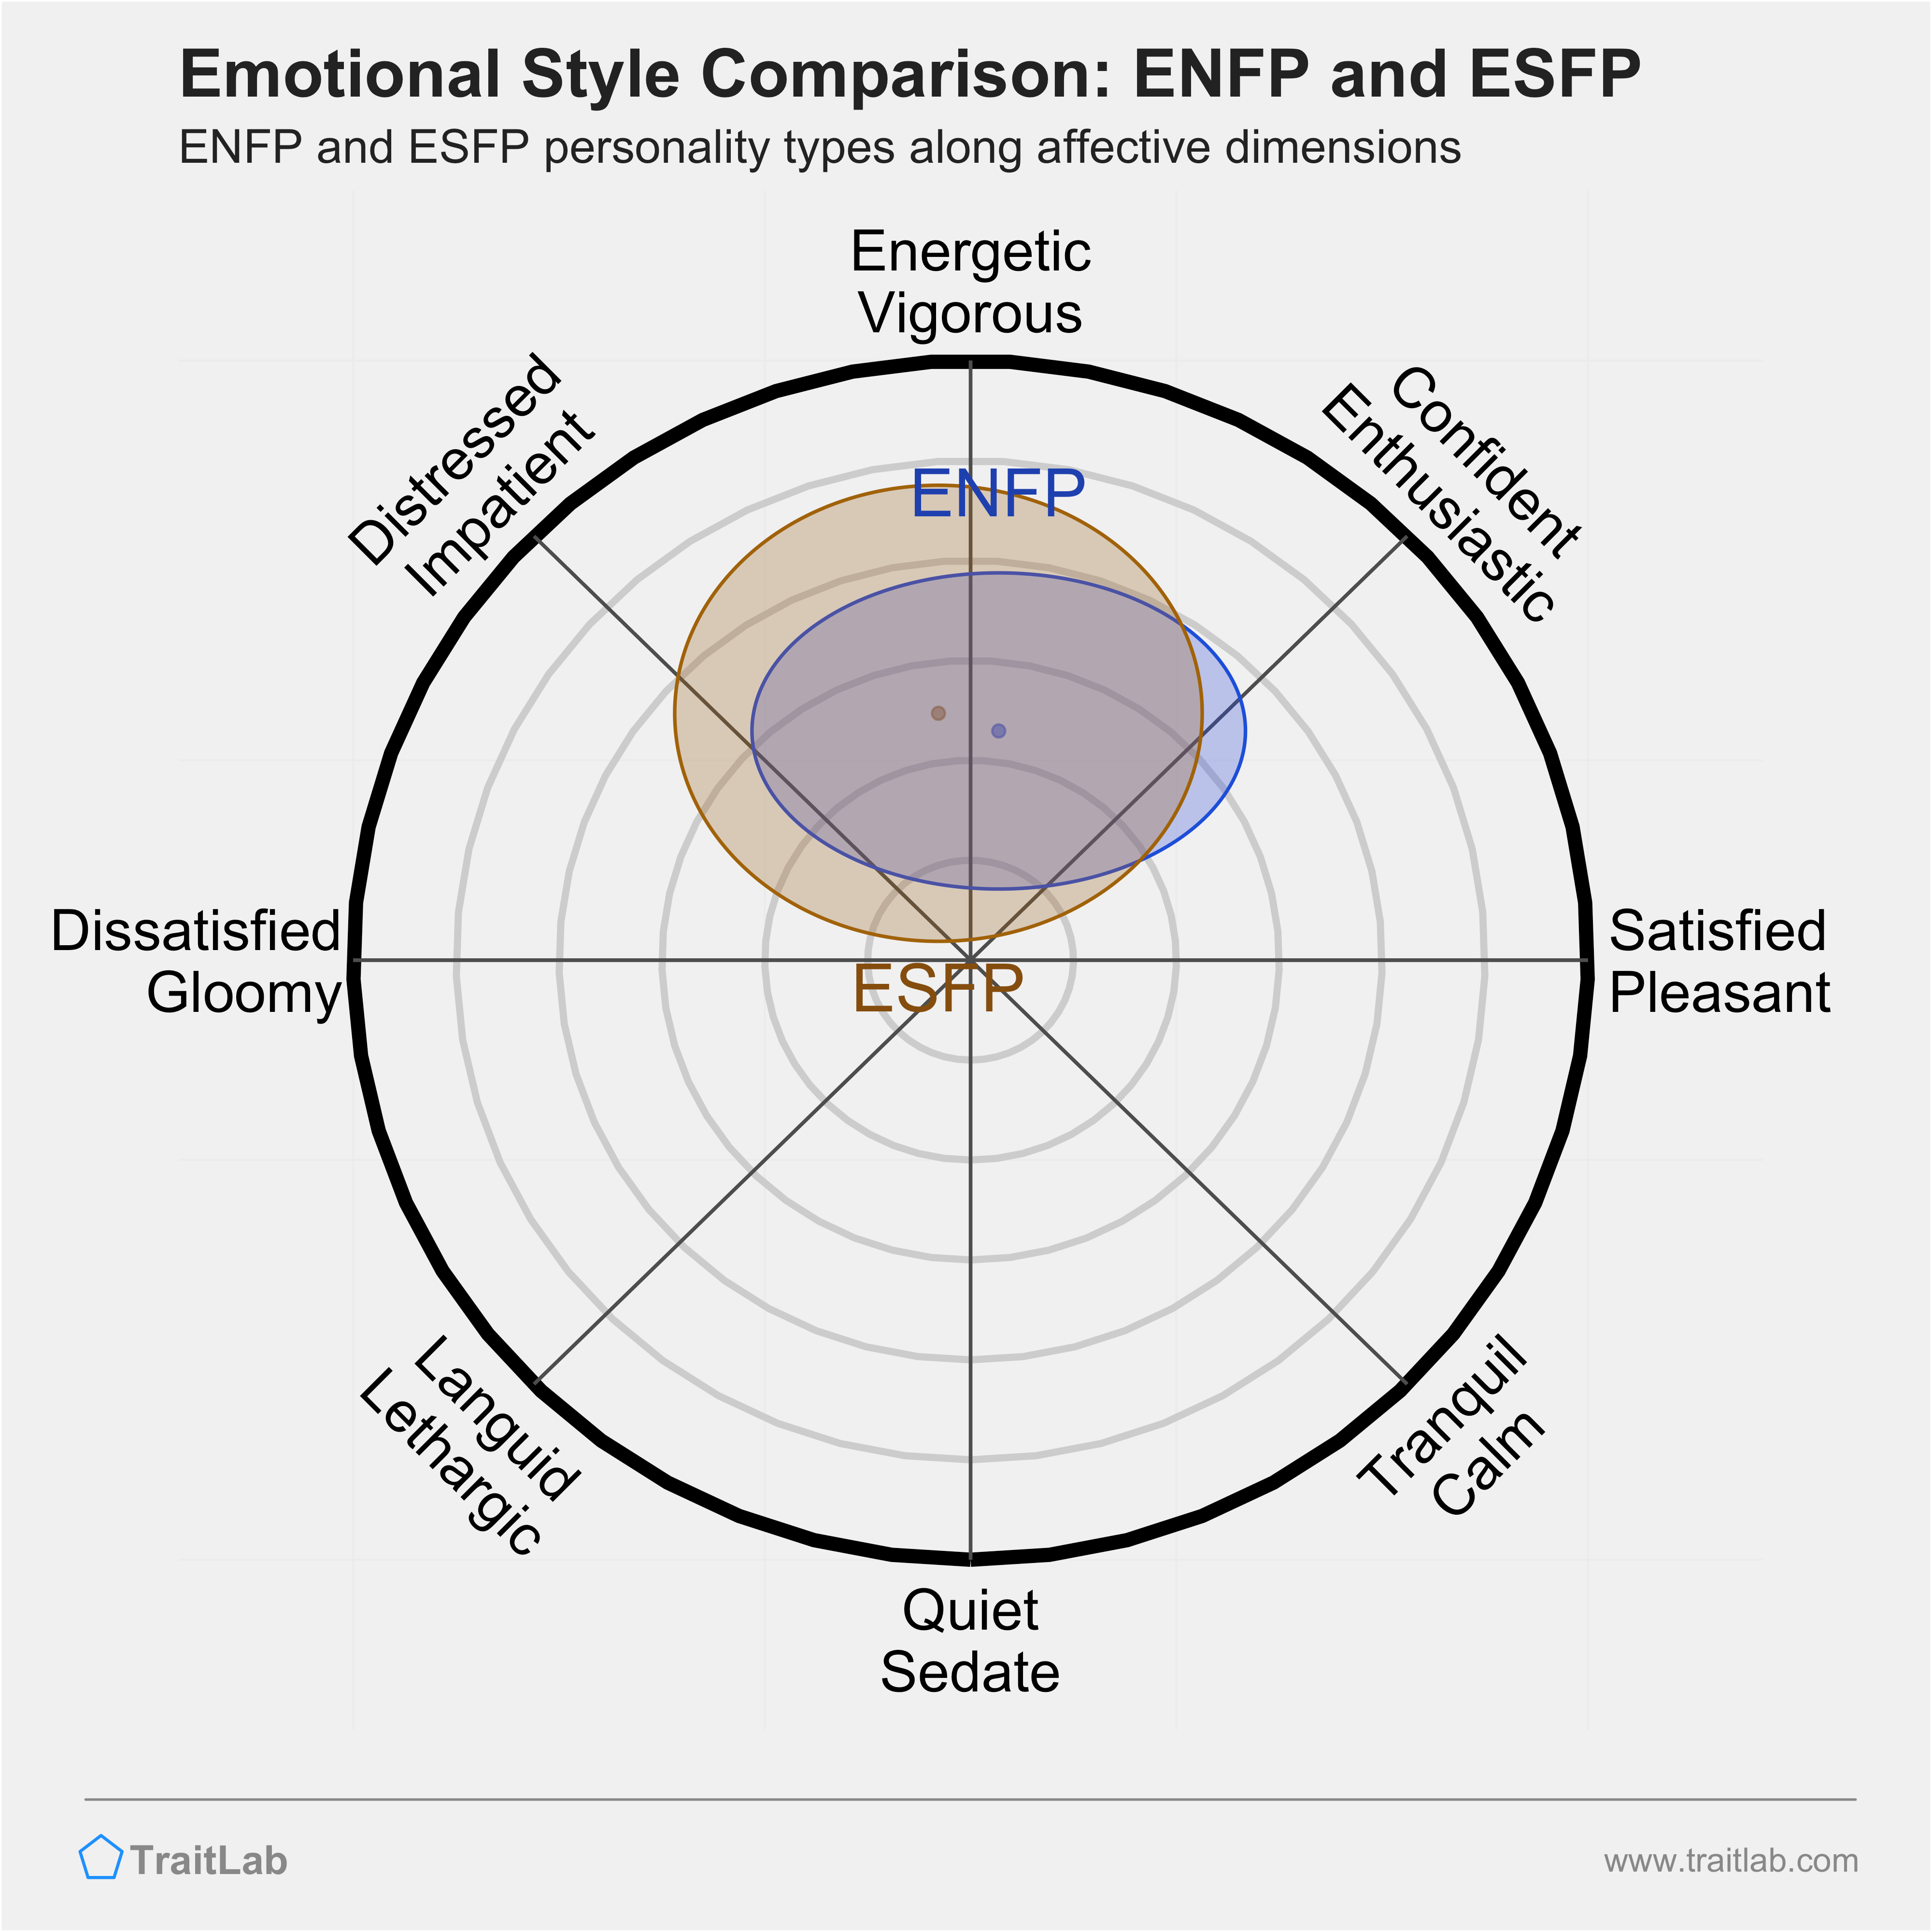 ENFP and ESFP comparison across emotional (affective) dimensions